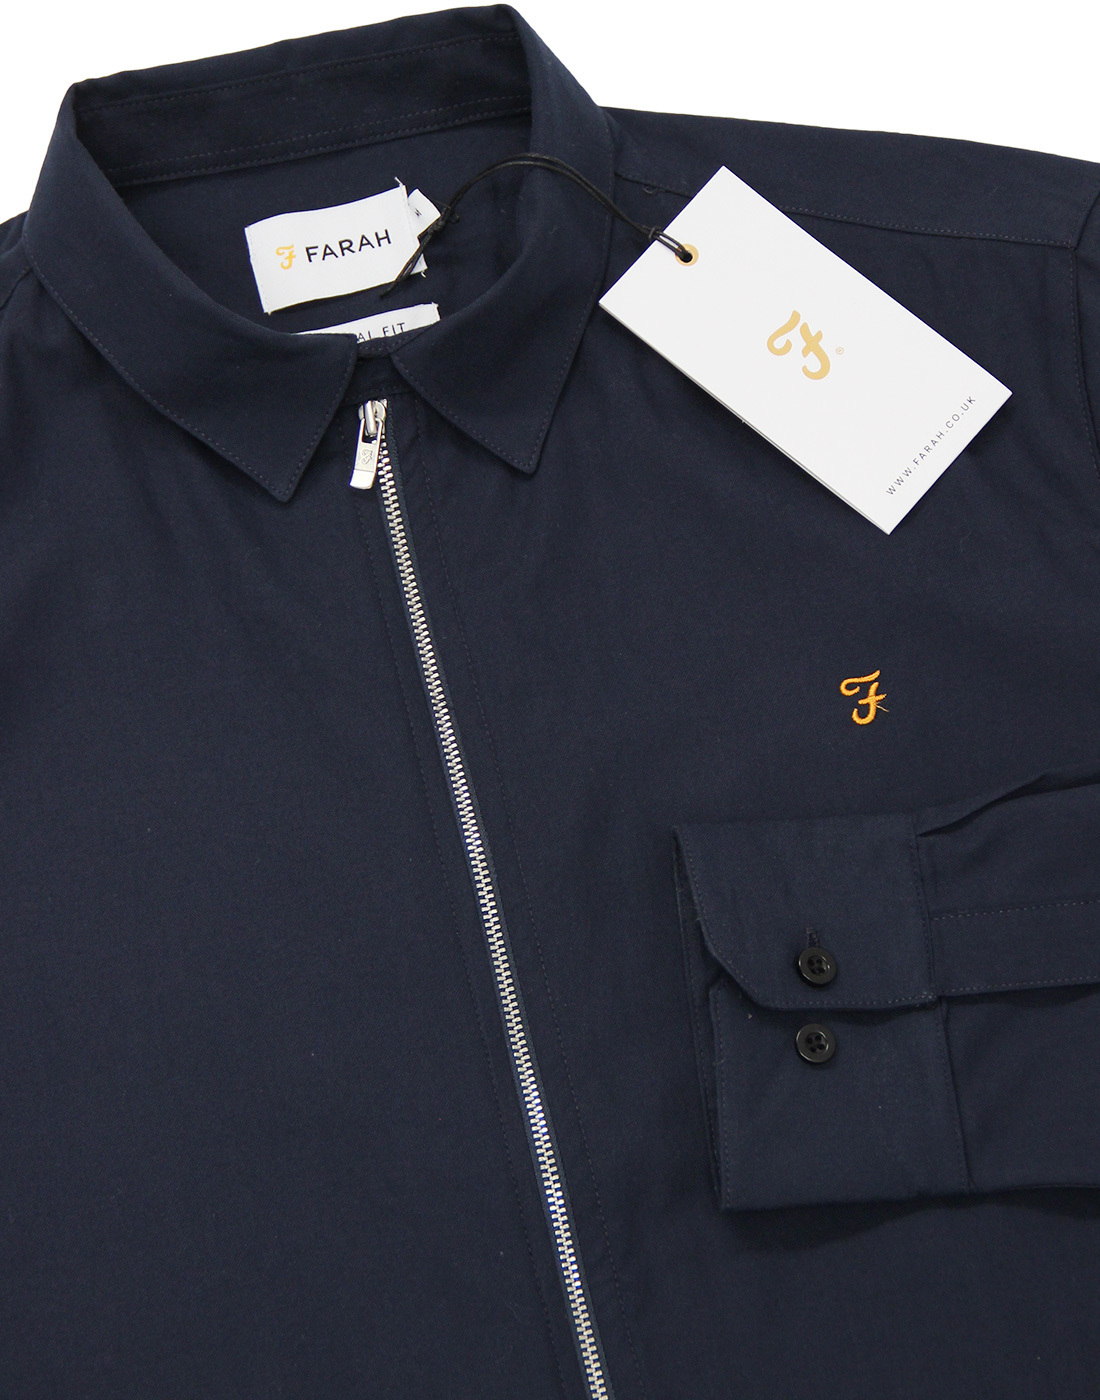 Roscoe FARAH Retro 60s Zip Through Oxford Shirt in Navy